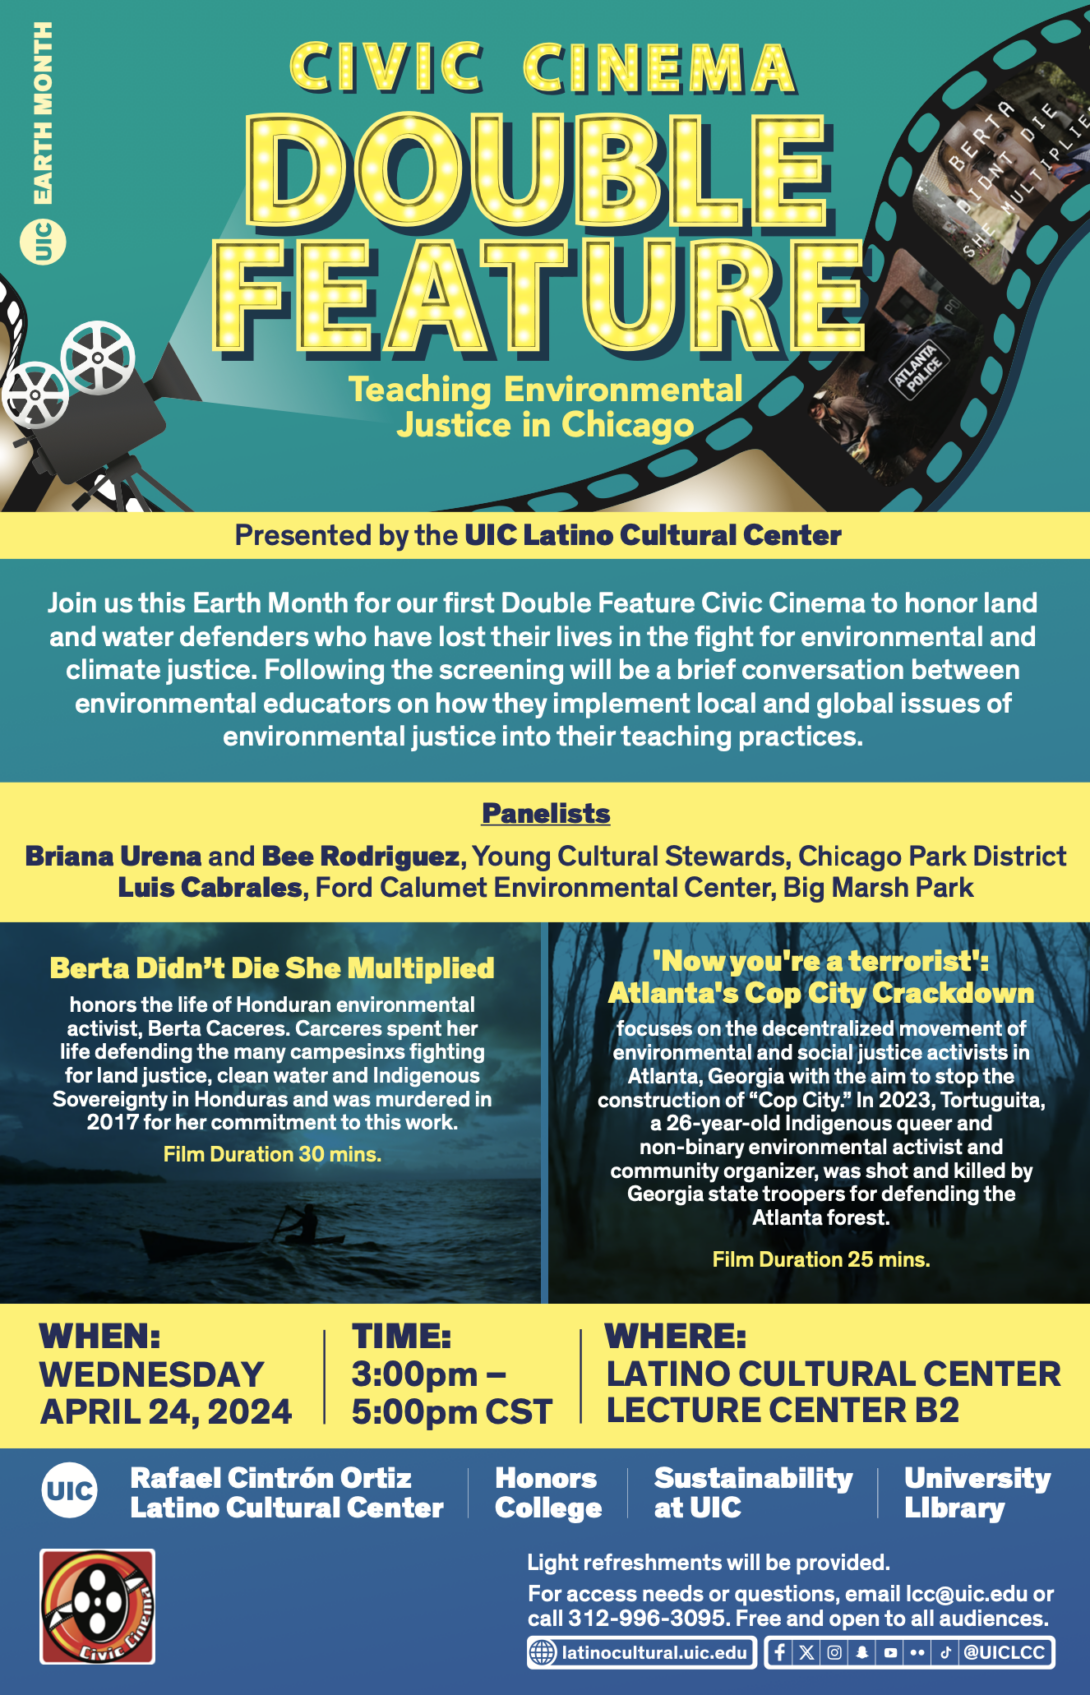 Civic Cinema event flyer